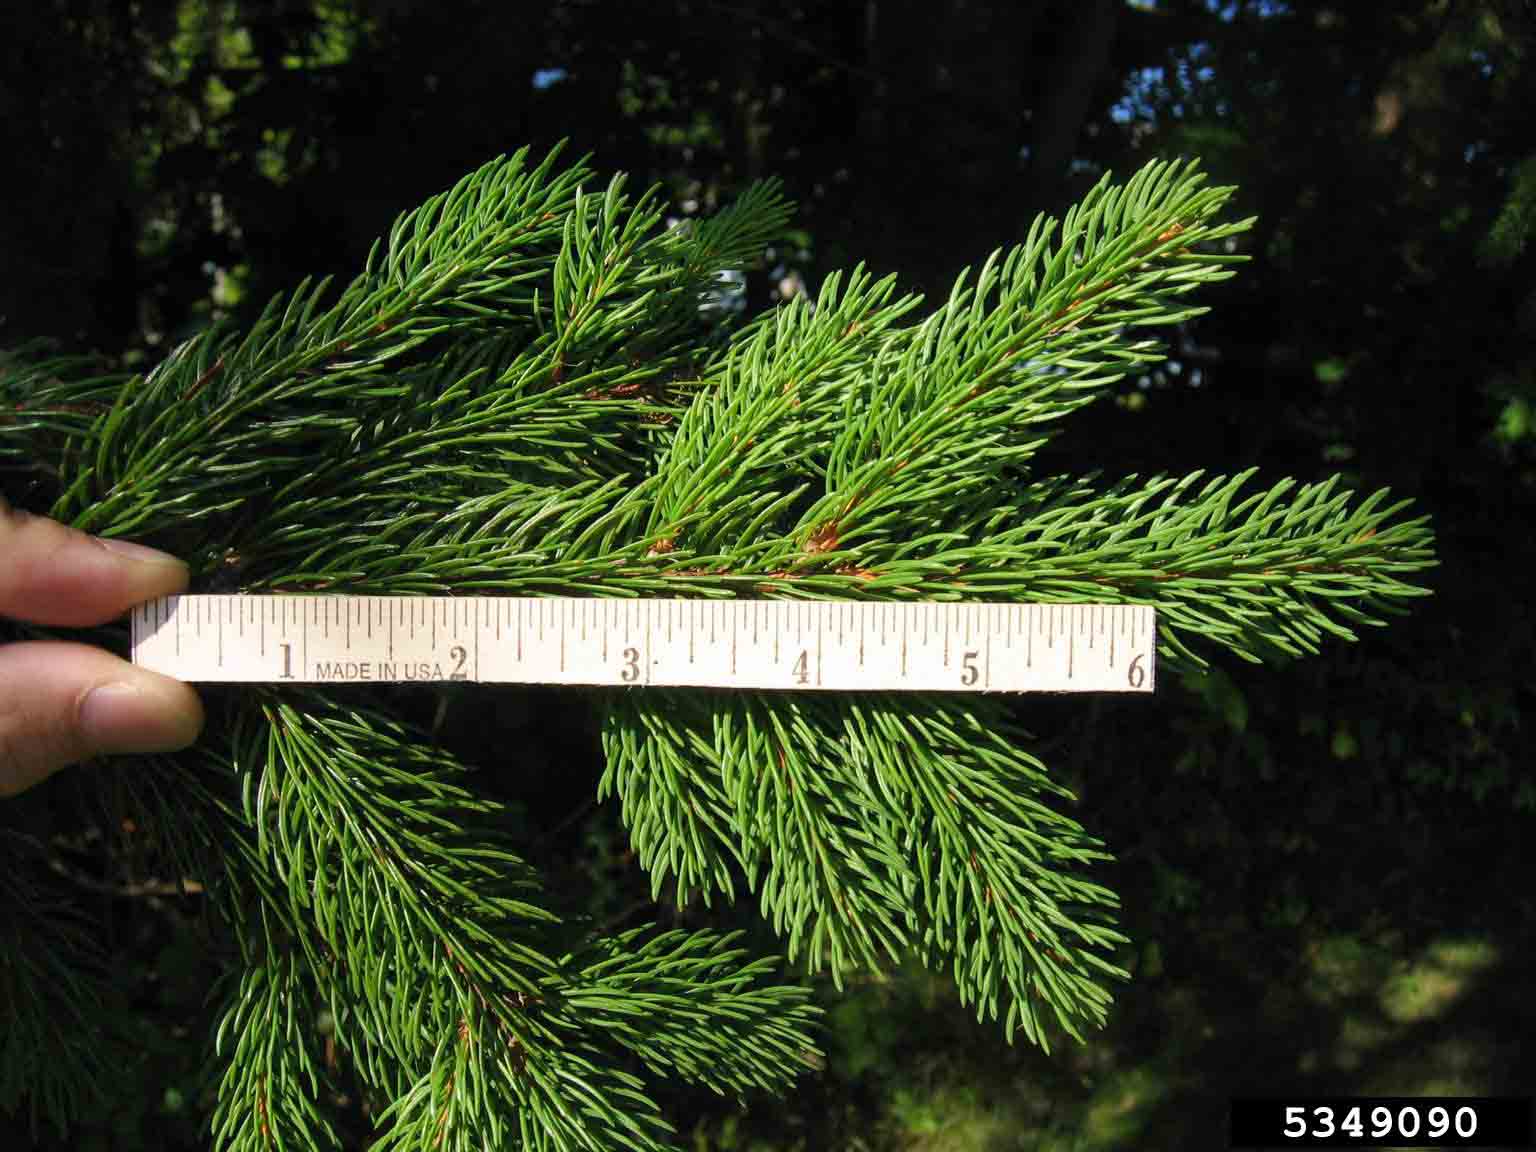 Norway spruce foliage